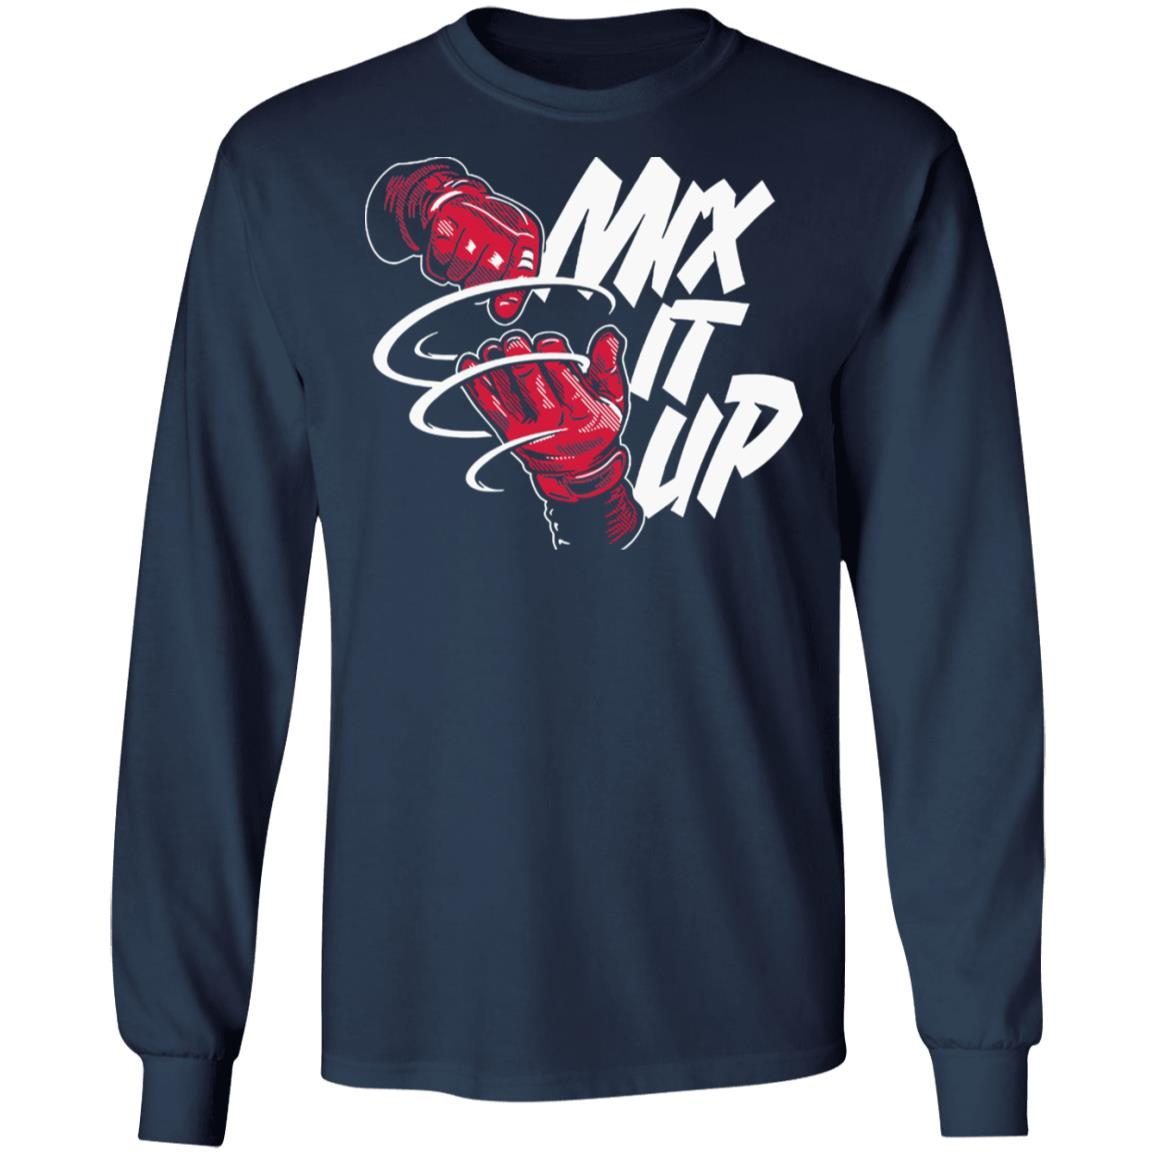 Atlanta Braves Mix It Up shirt